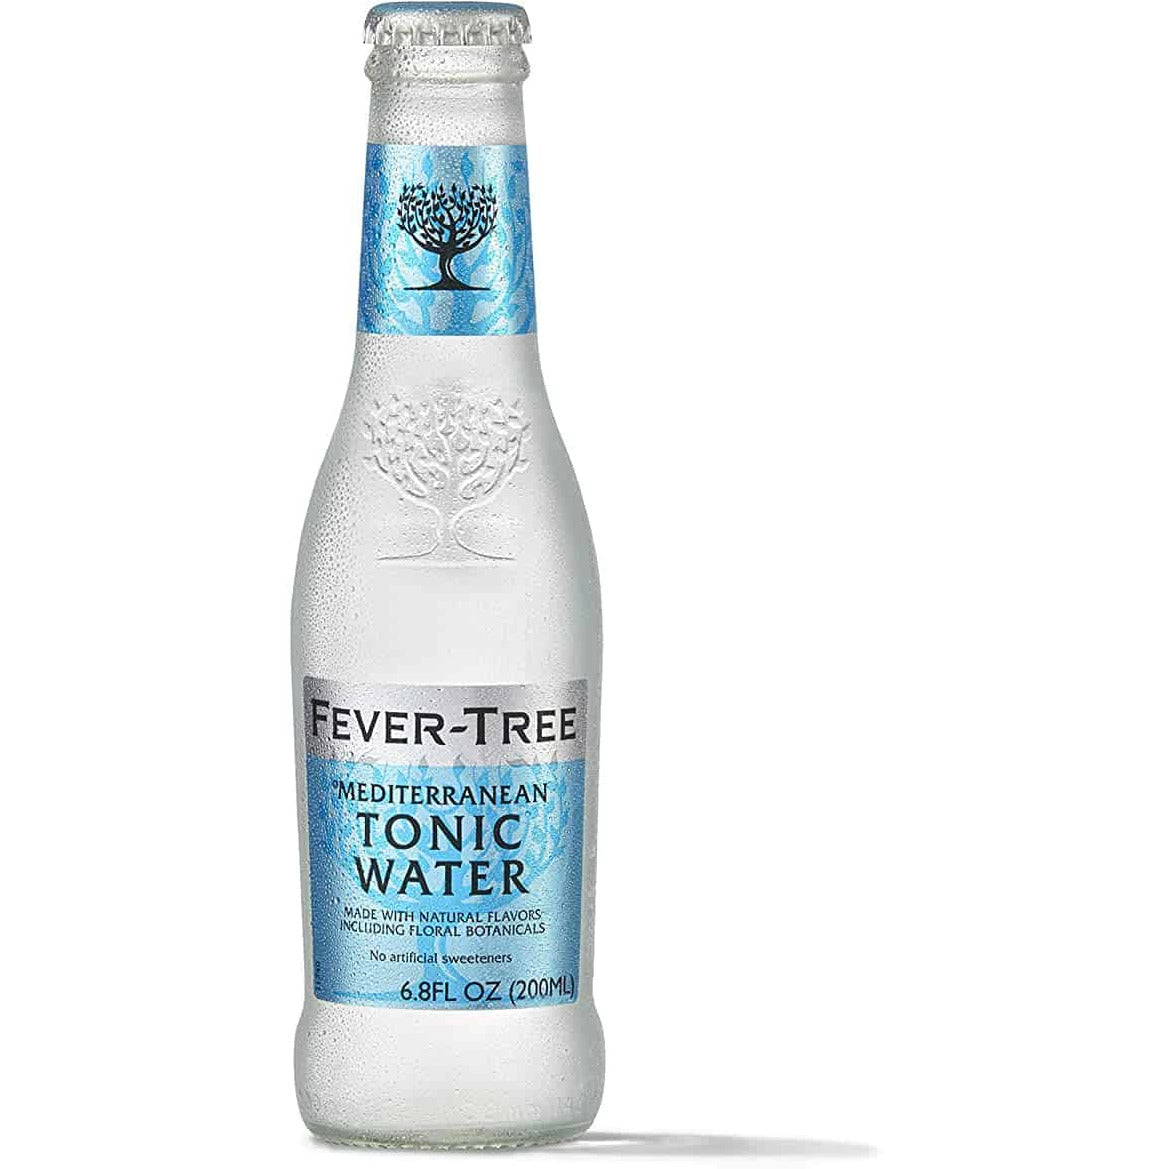 Fever-Tree Mediterranean Tonic Water - Case of 24